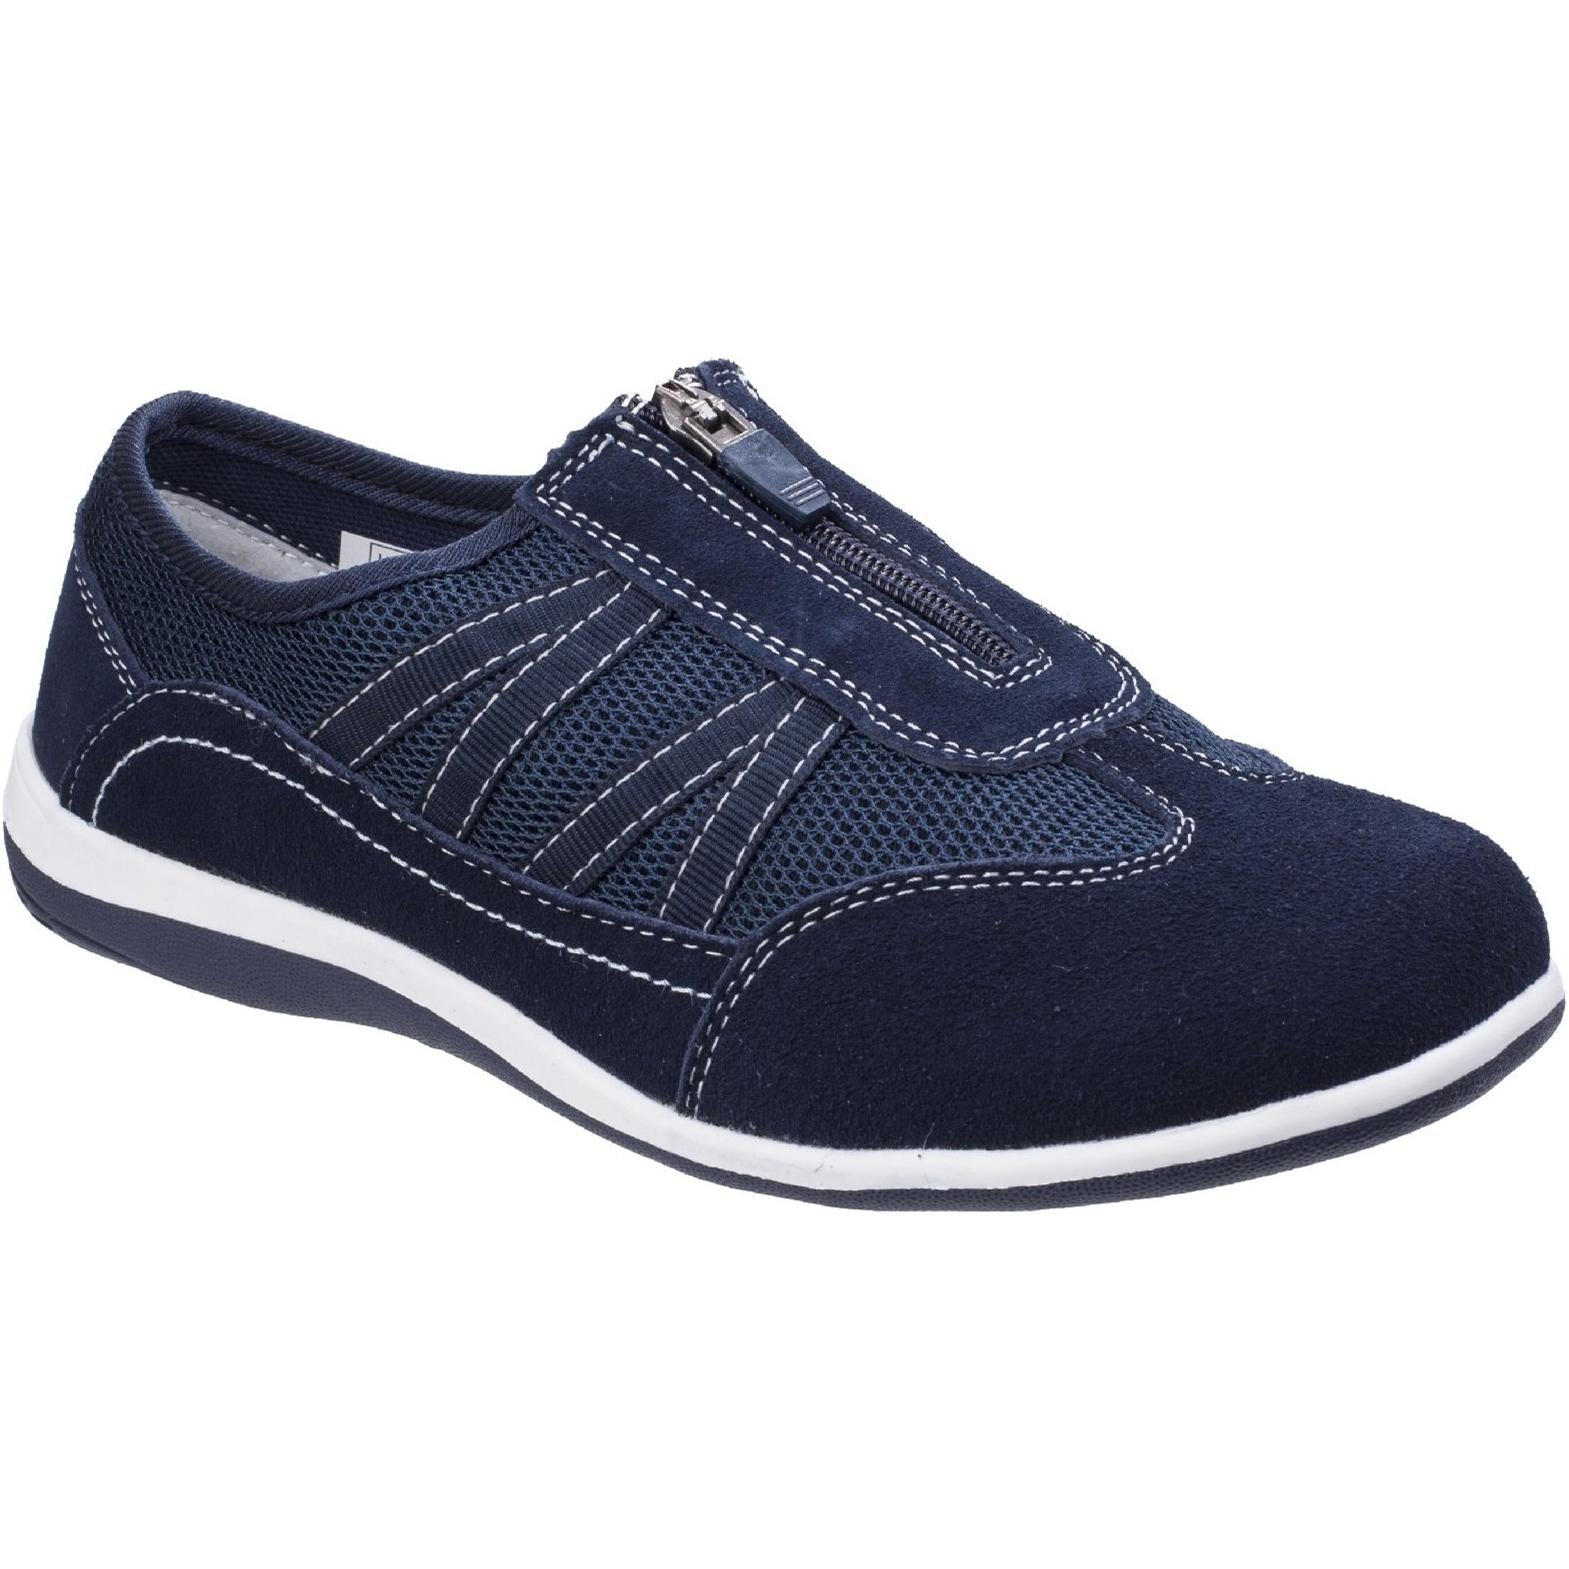 Fleet & Foster Mombassa Comfort Shoe